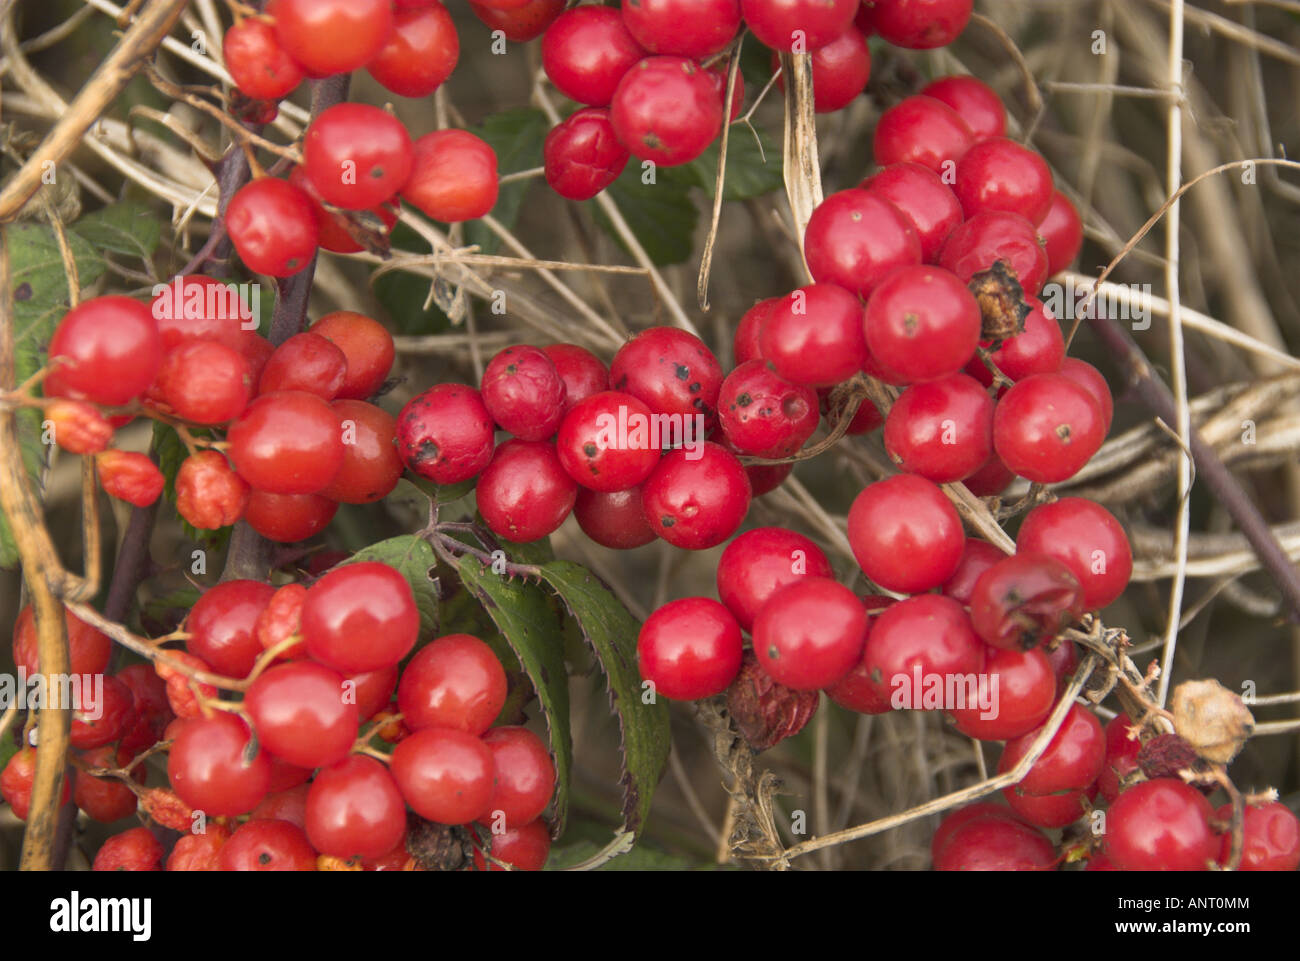 Black bryony tamus communis berries left on stems in winter Norfolk England December Stock Photo